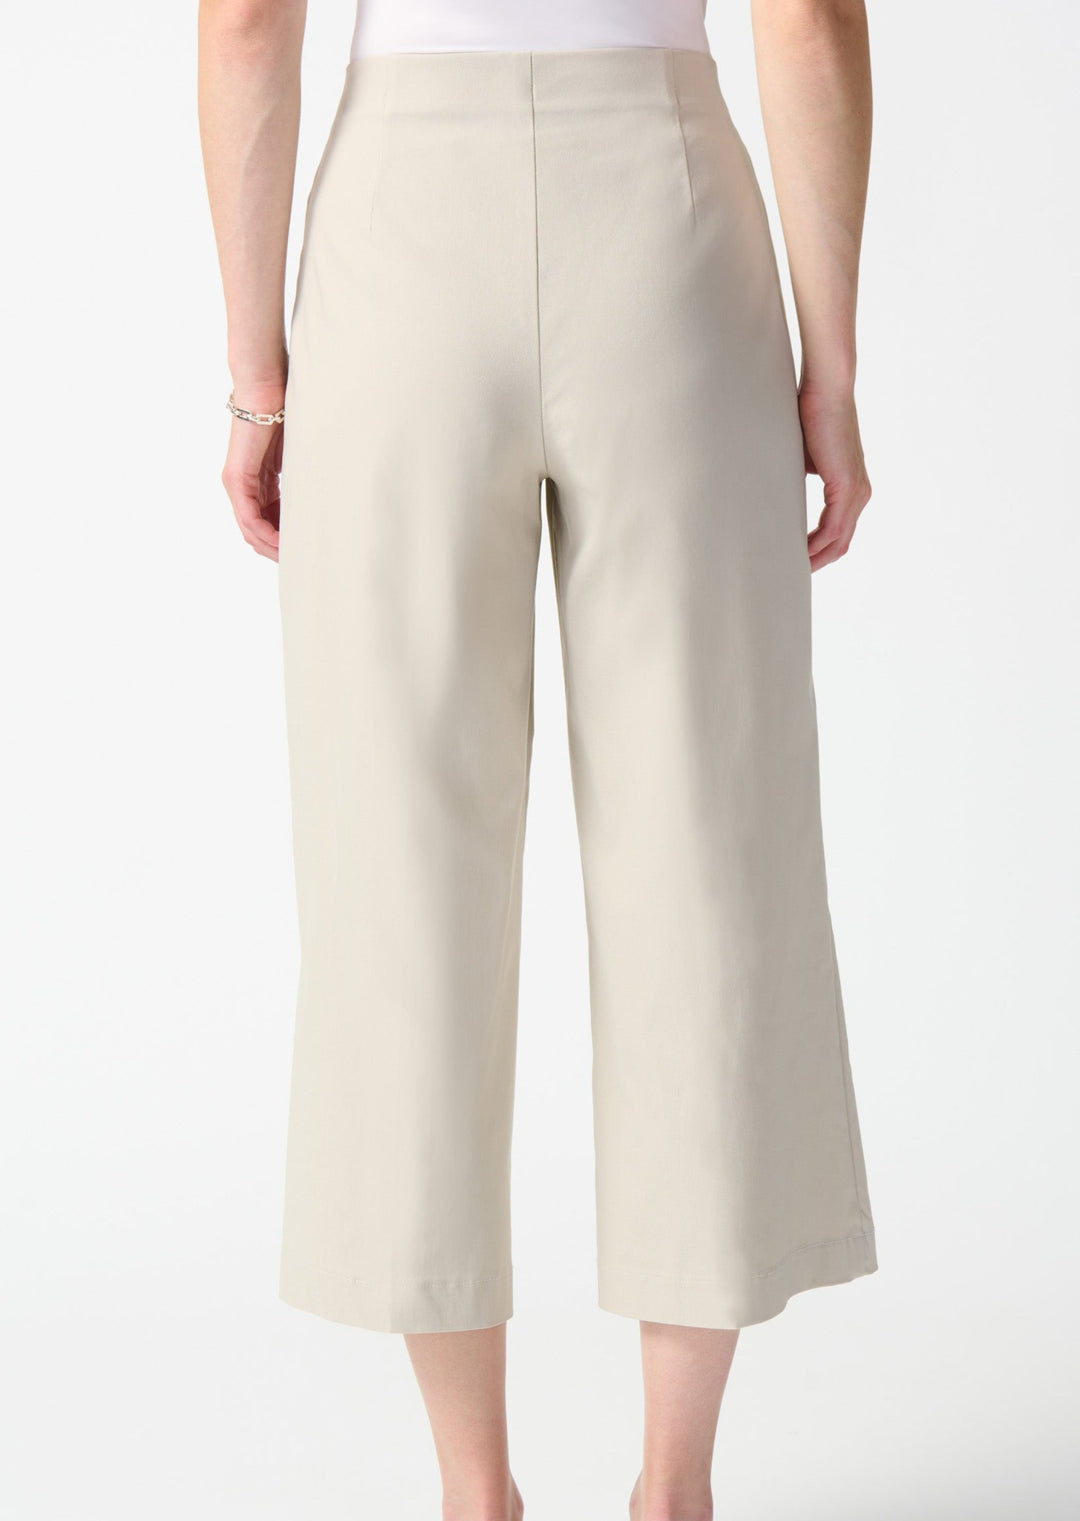 Joseph Ribkoff - Millennium Culotte Pull-On Pants